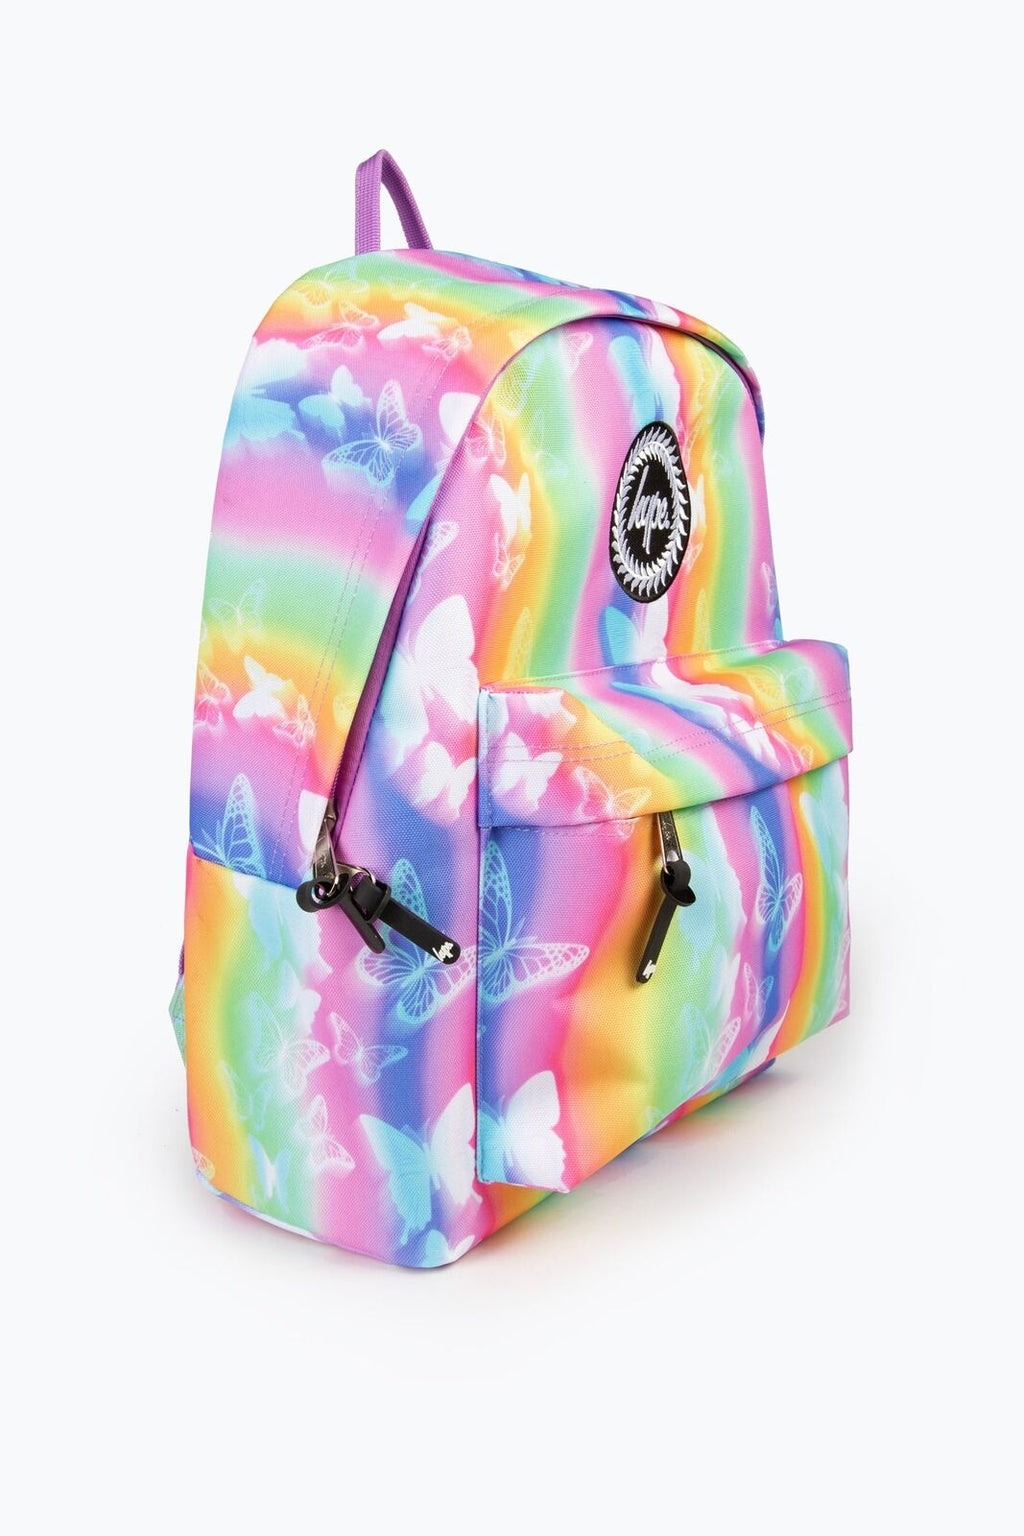 Hype Girls Multi Butterfly Rainbow Backpack